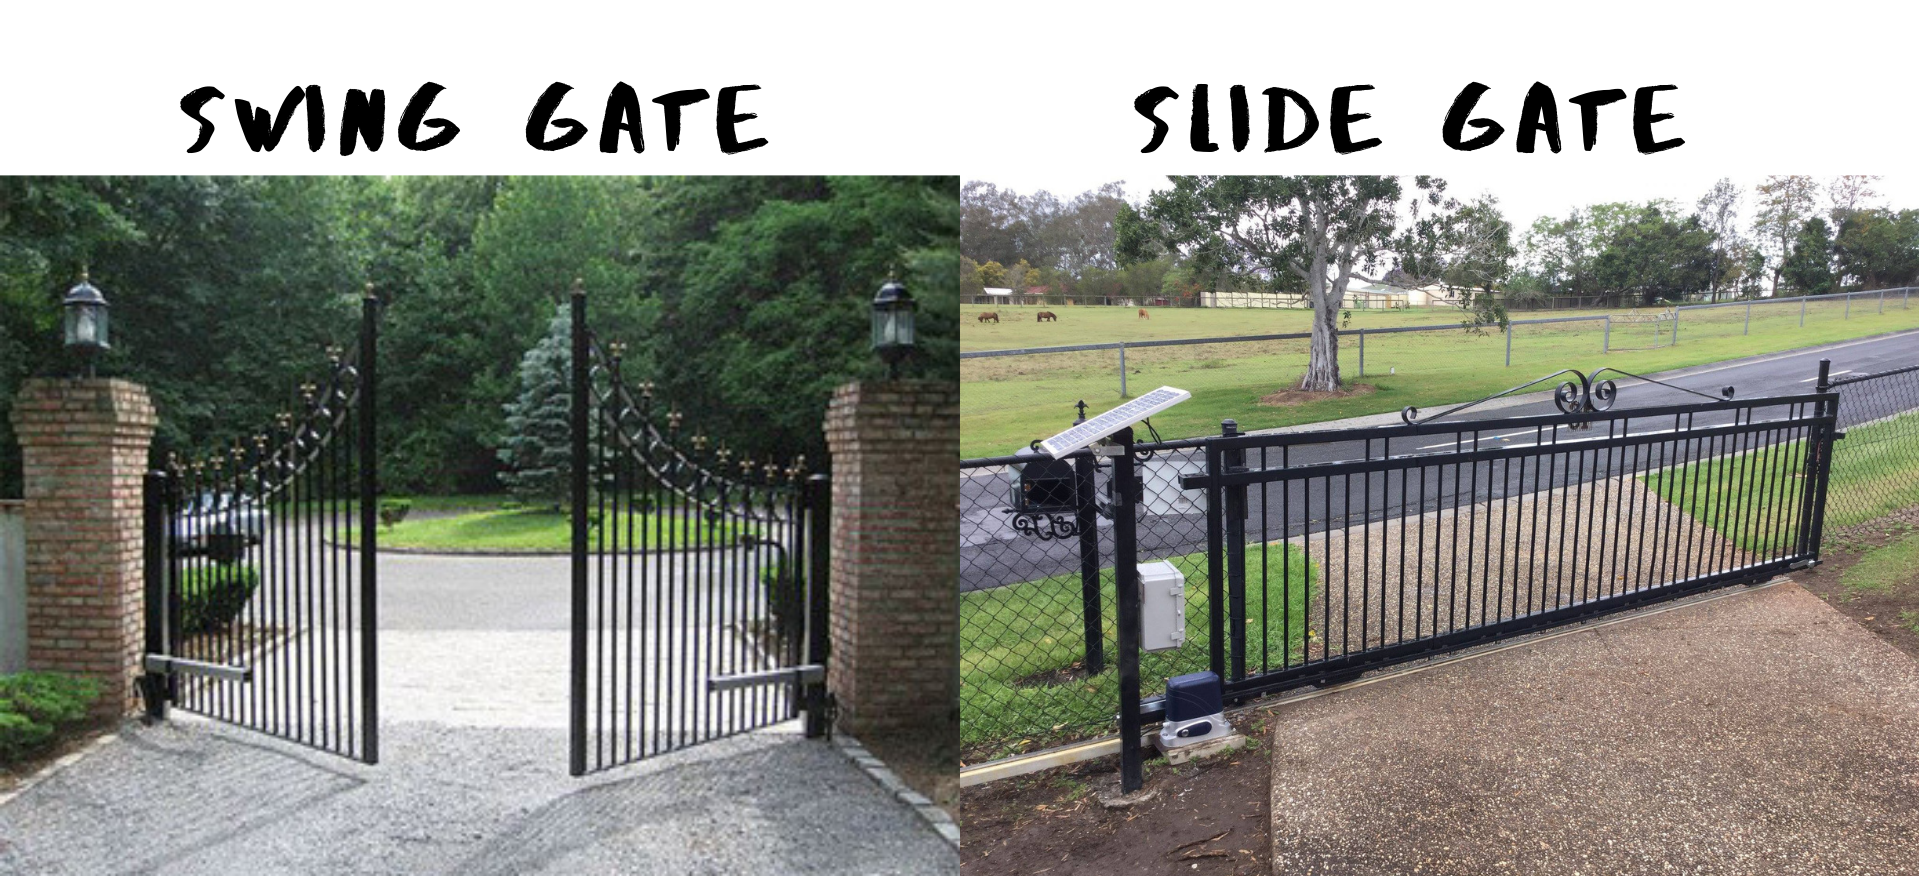 Should I Choose a Swing Gate or a Sliding Gate?